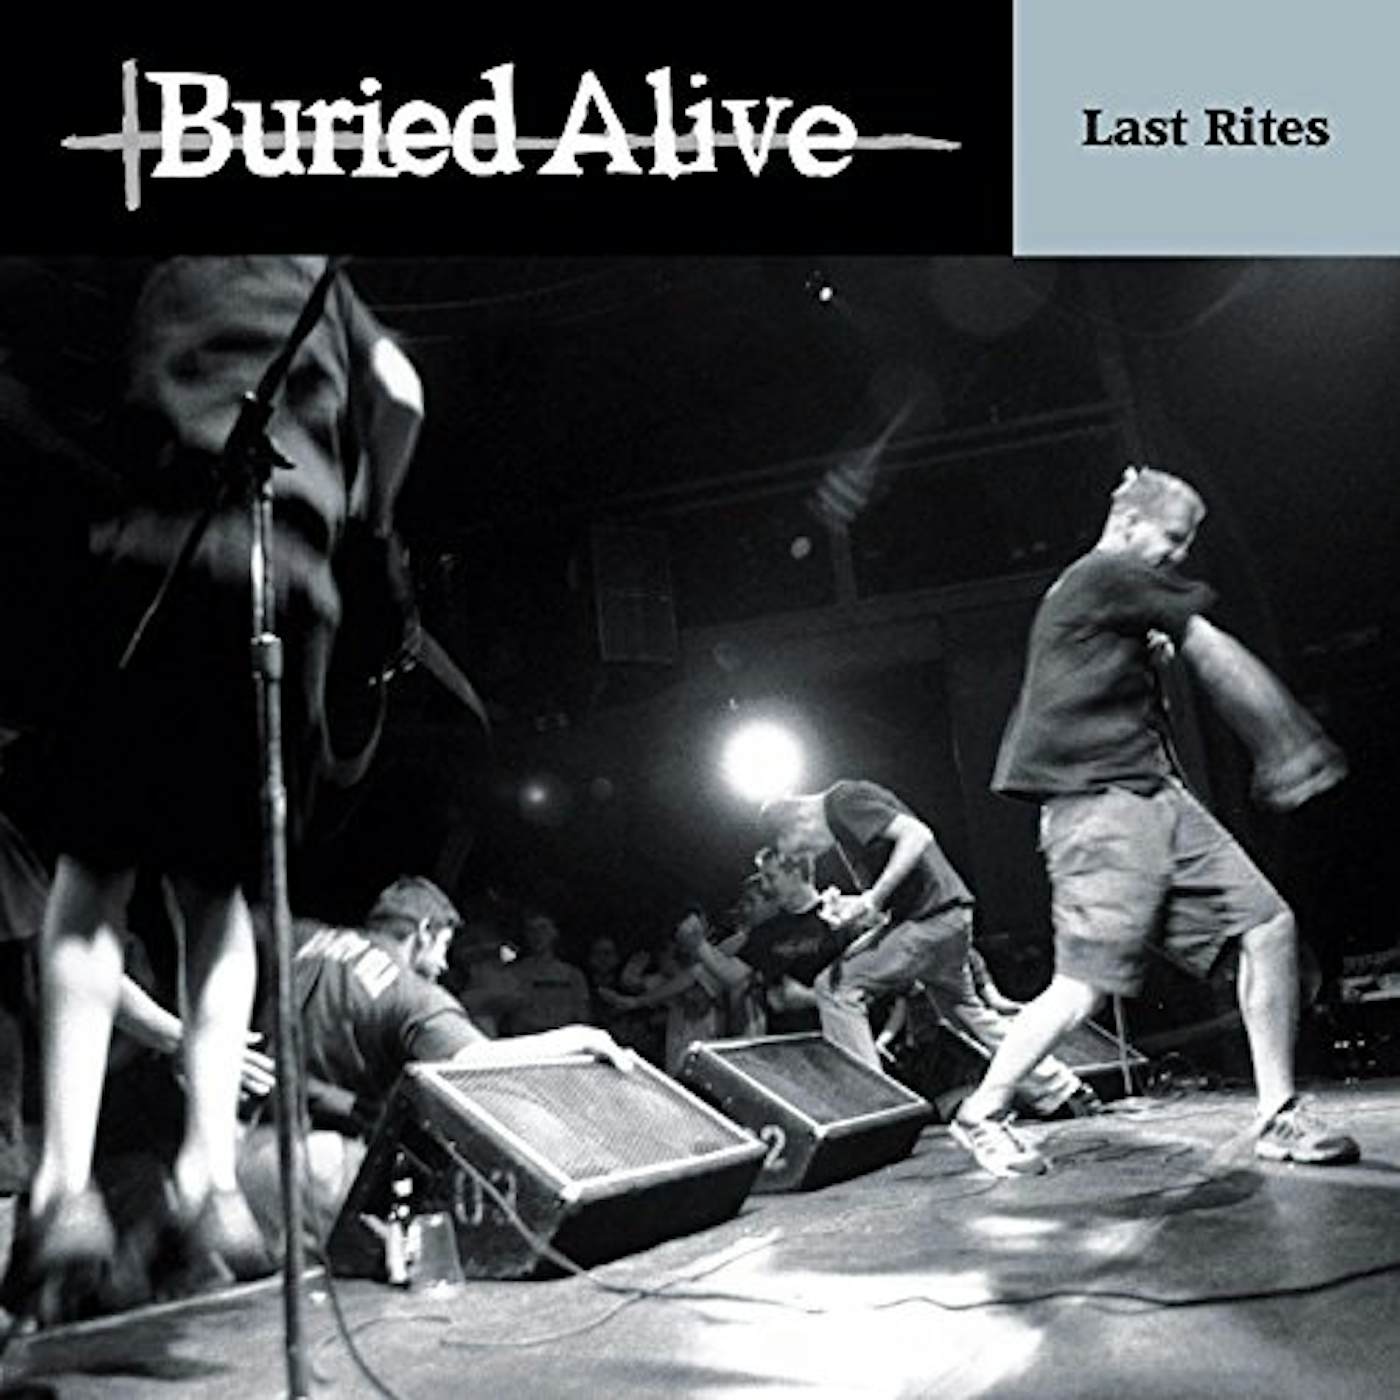 Buried Alive Last Rites Vinyl Record